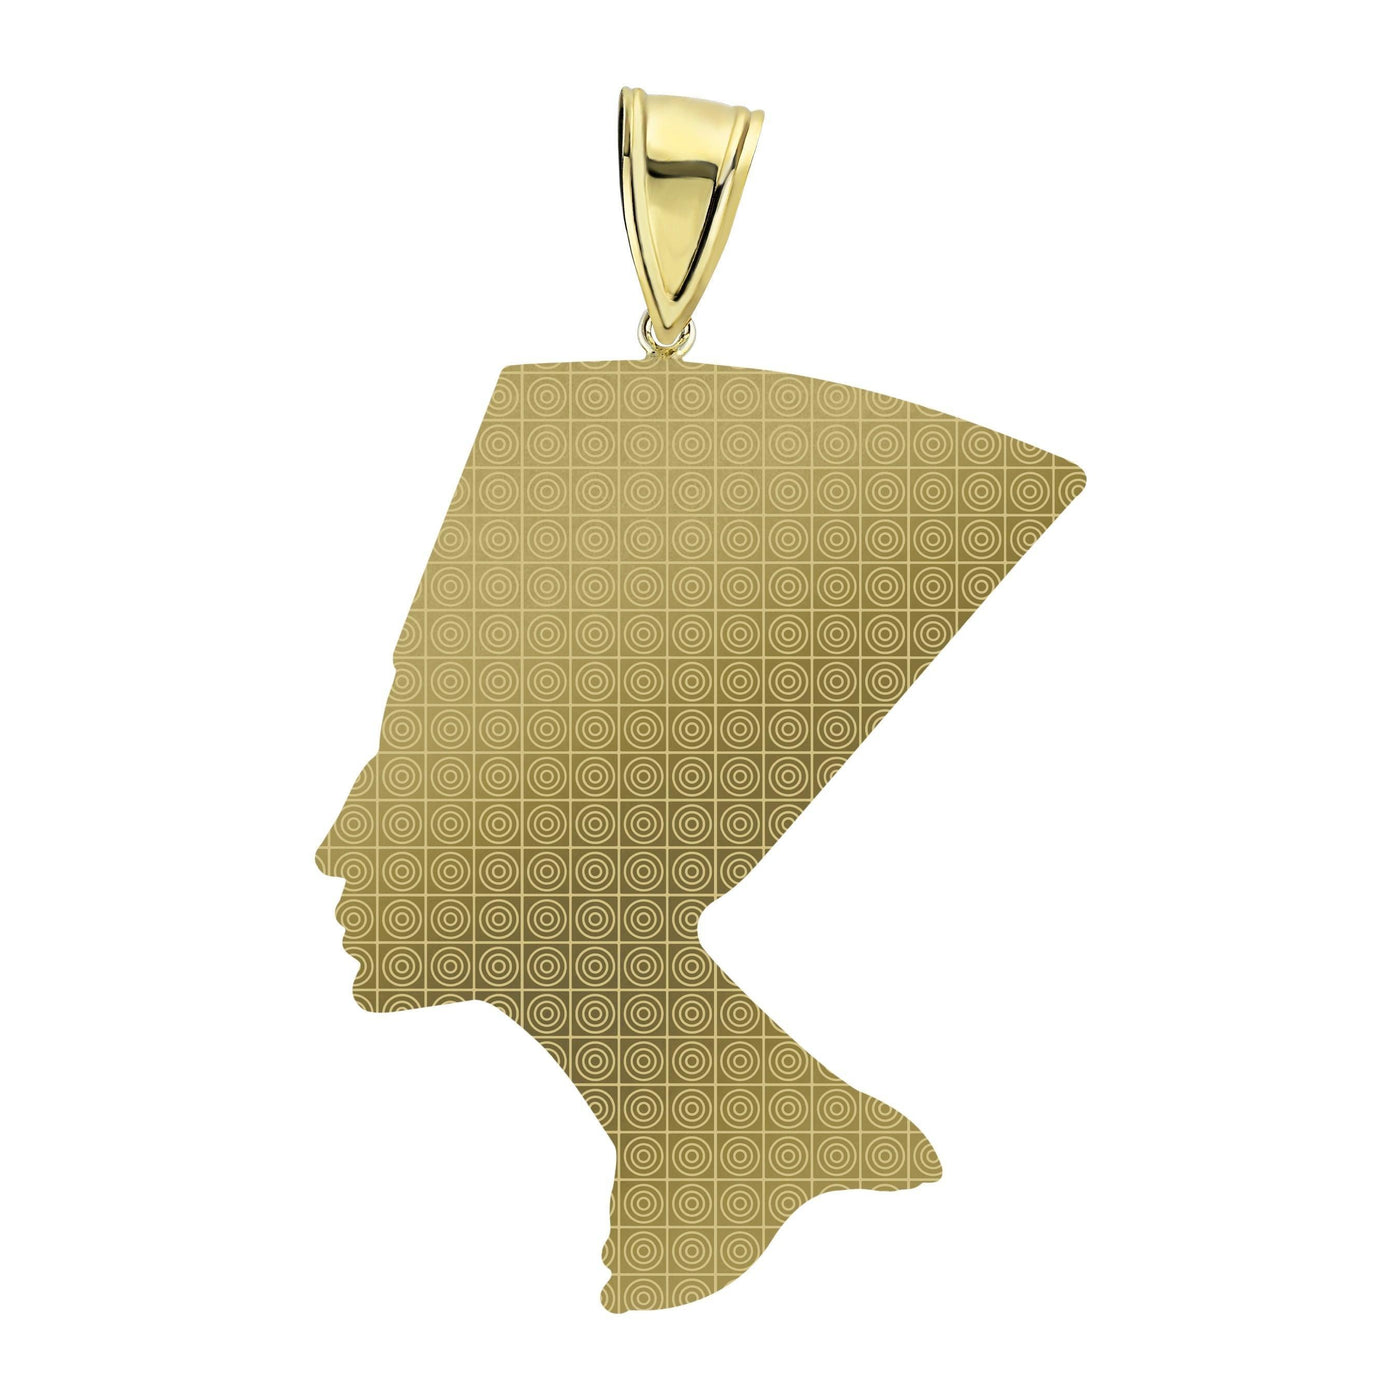 3" Egyptian Queen Nefertiti Head Diamond Cut Pendant 10K Yellow Gold - bayamjewelry